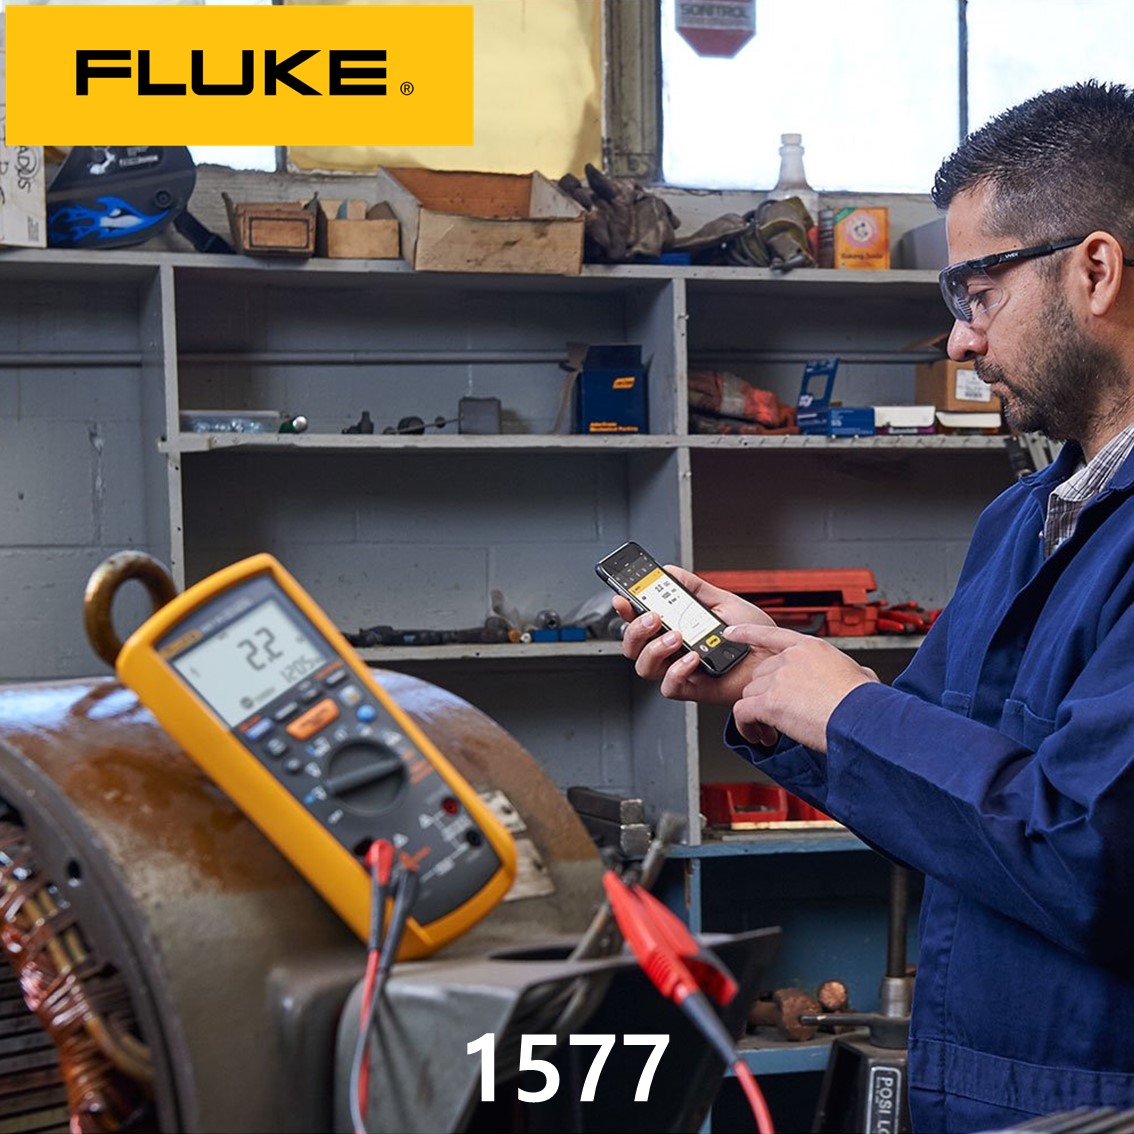 [ FLUKE 1577 ] 플루크 절연저항 멀티미터, 절연저항 테스터기 1577